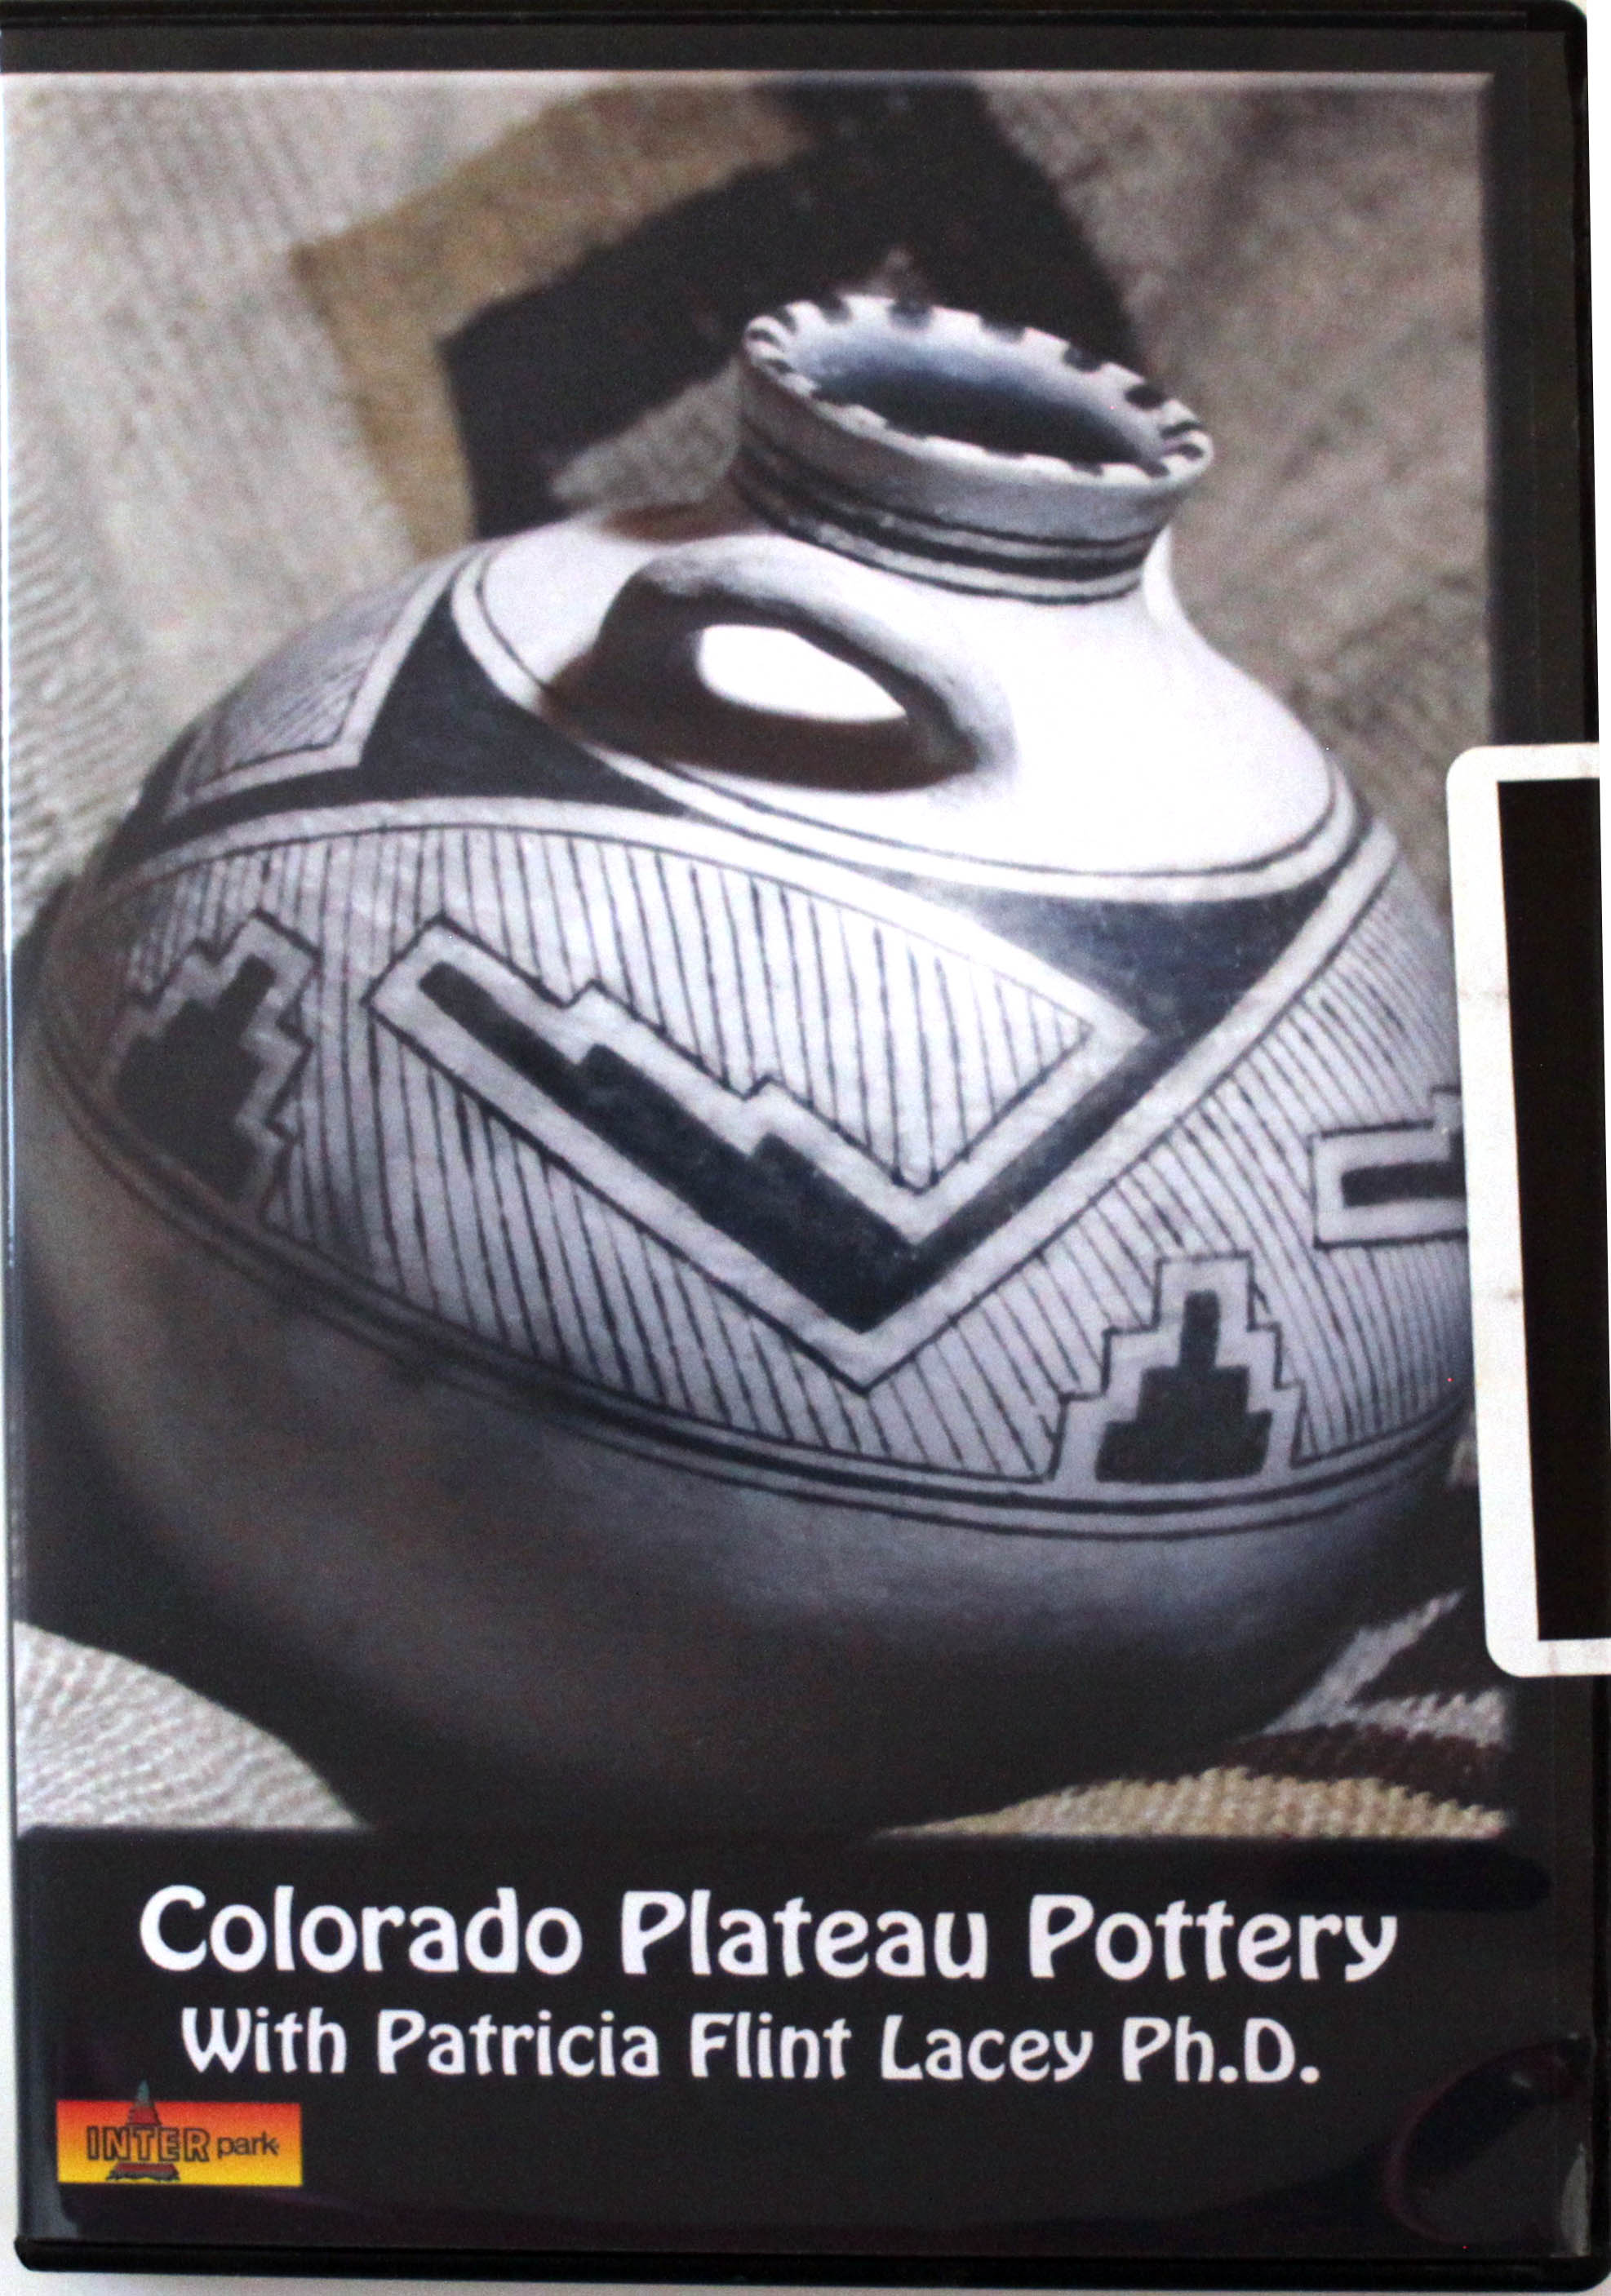 Colorado Plateau Pottery